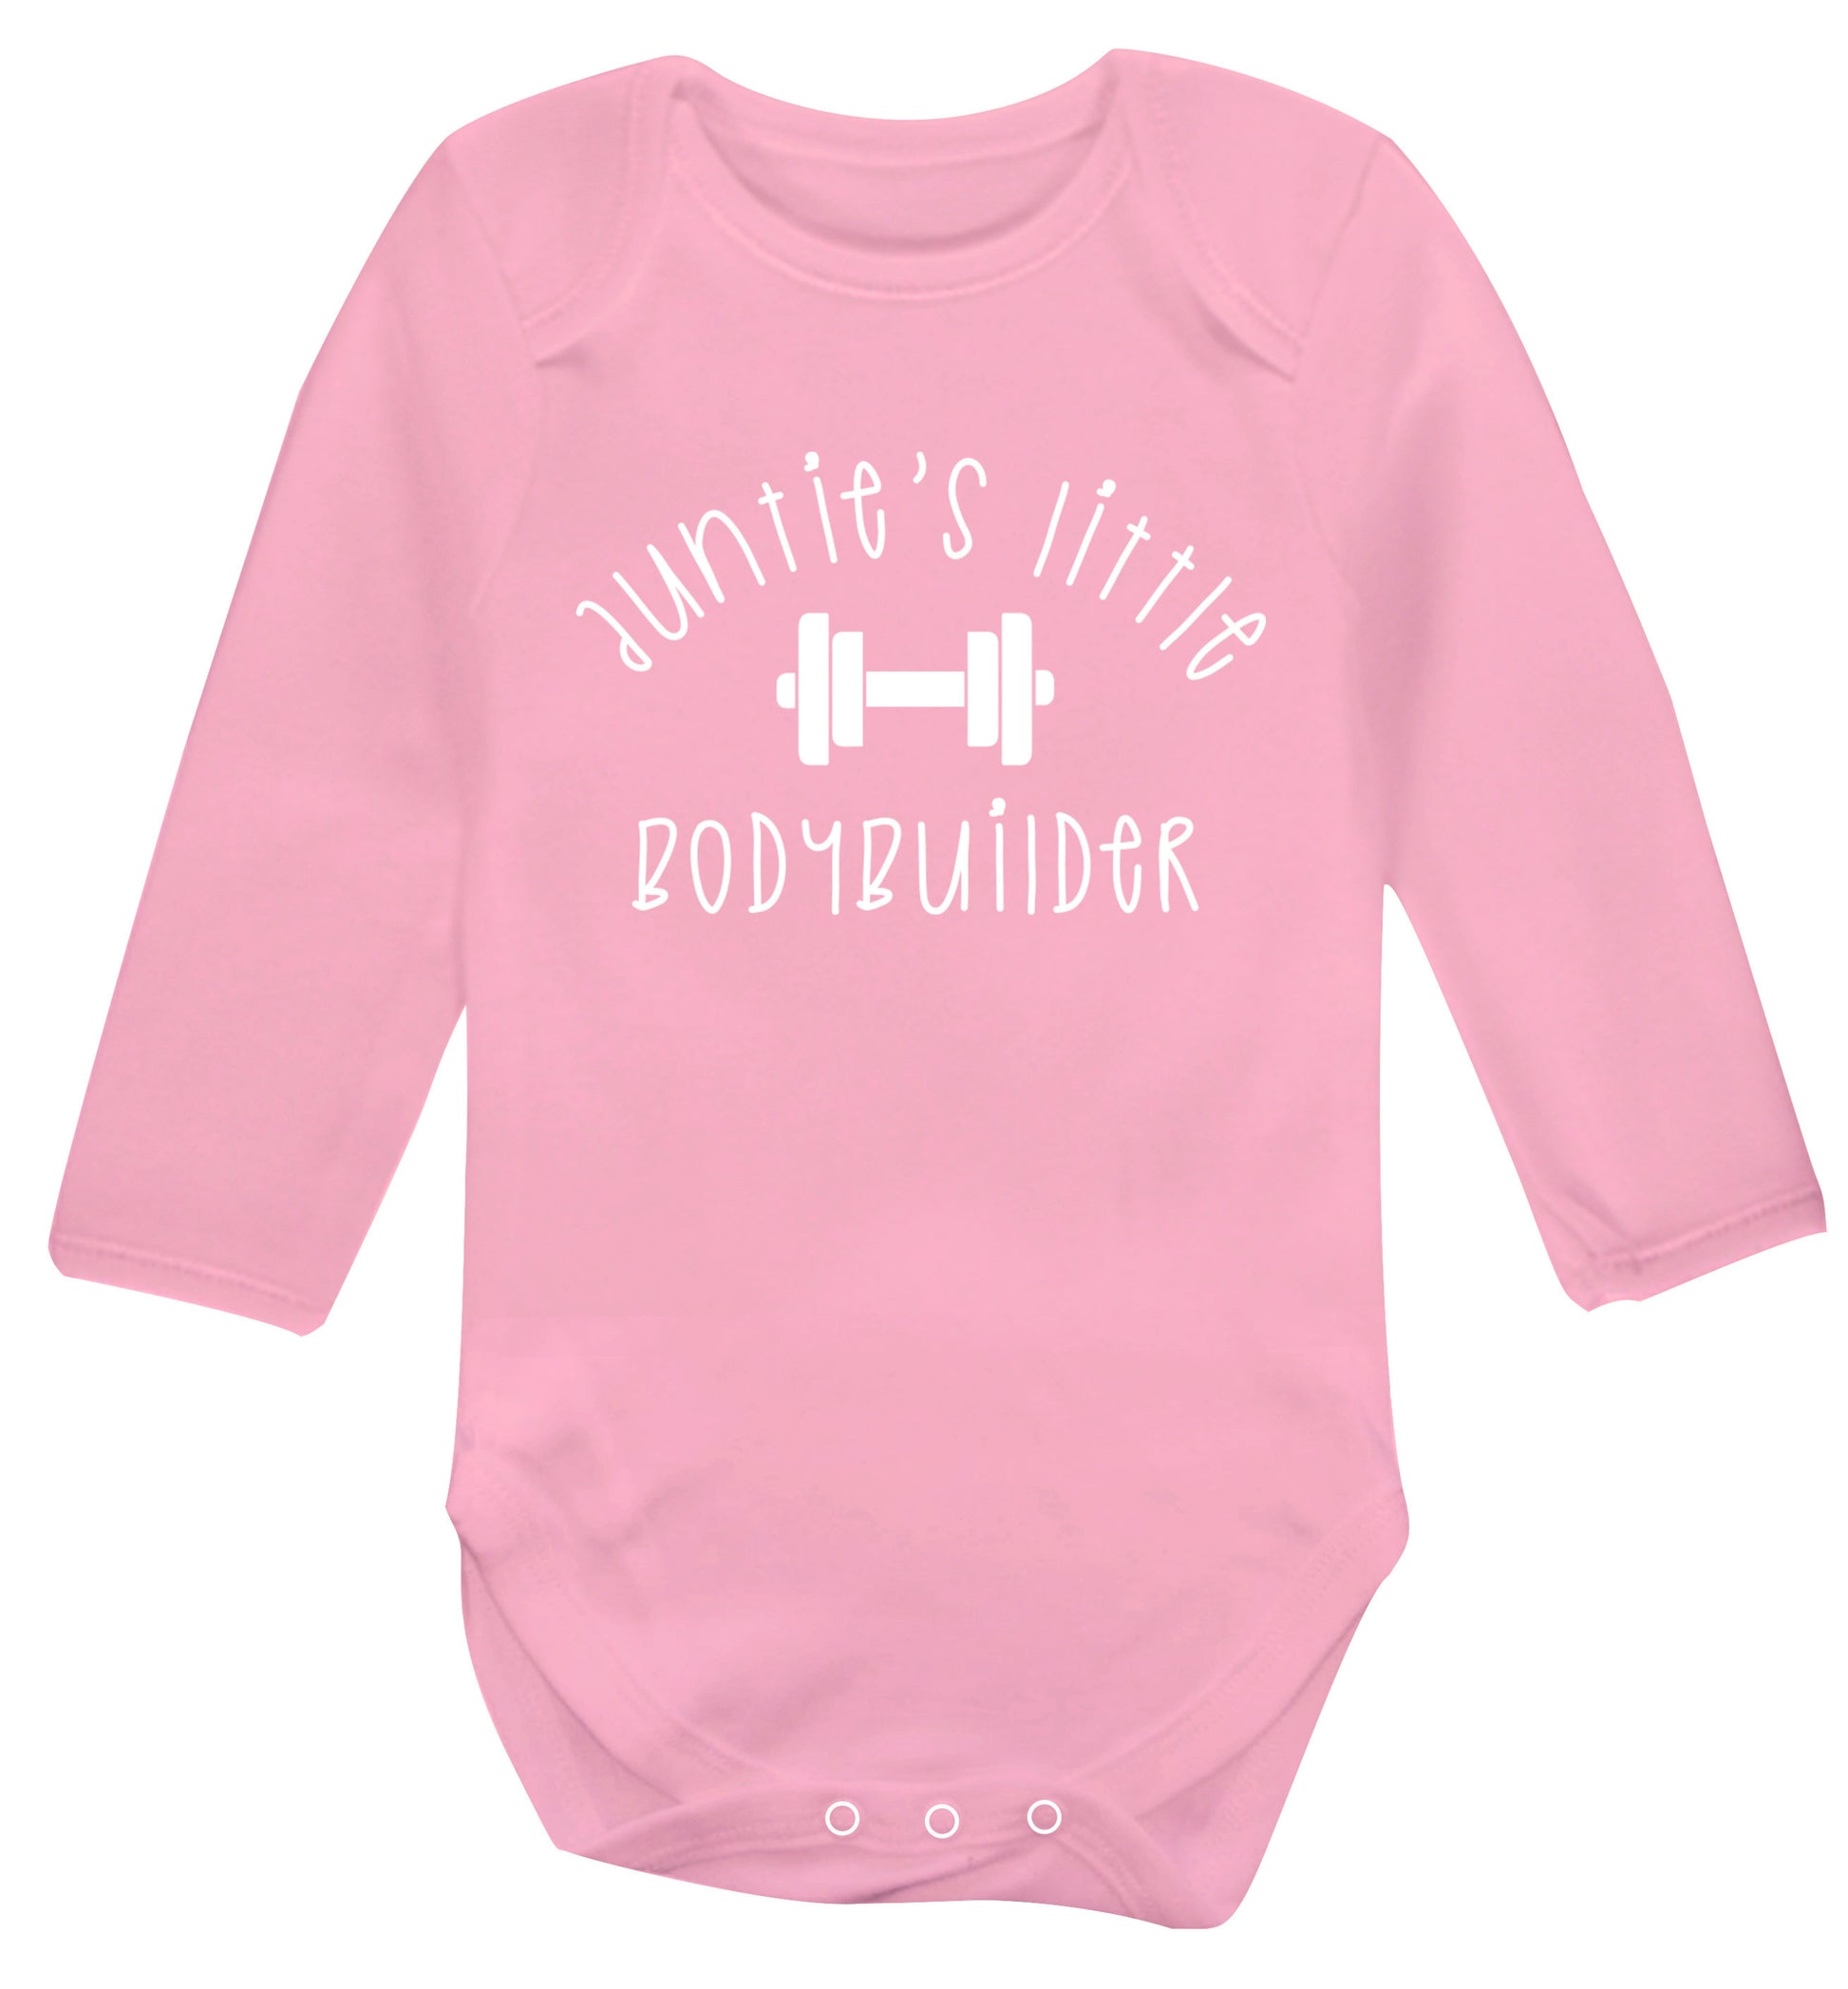 Auntie's little bodybuilder Baby Vest long sleeved pale pink 6-12 months